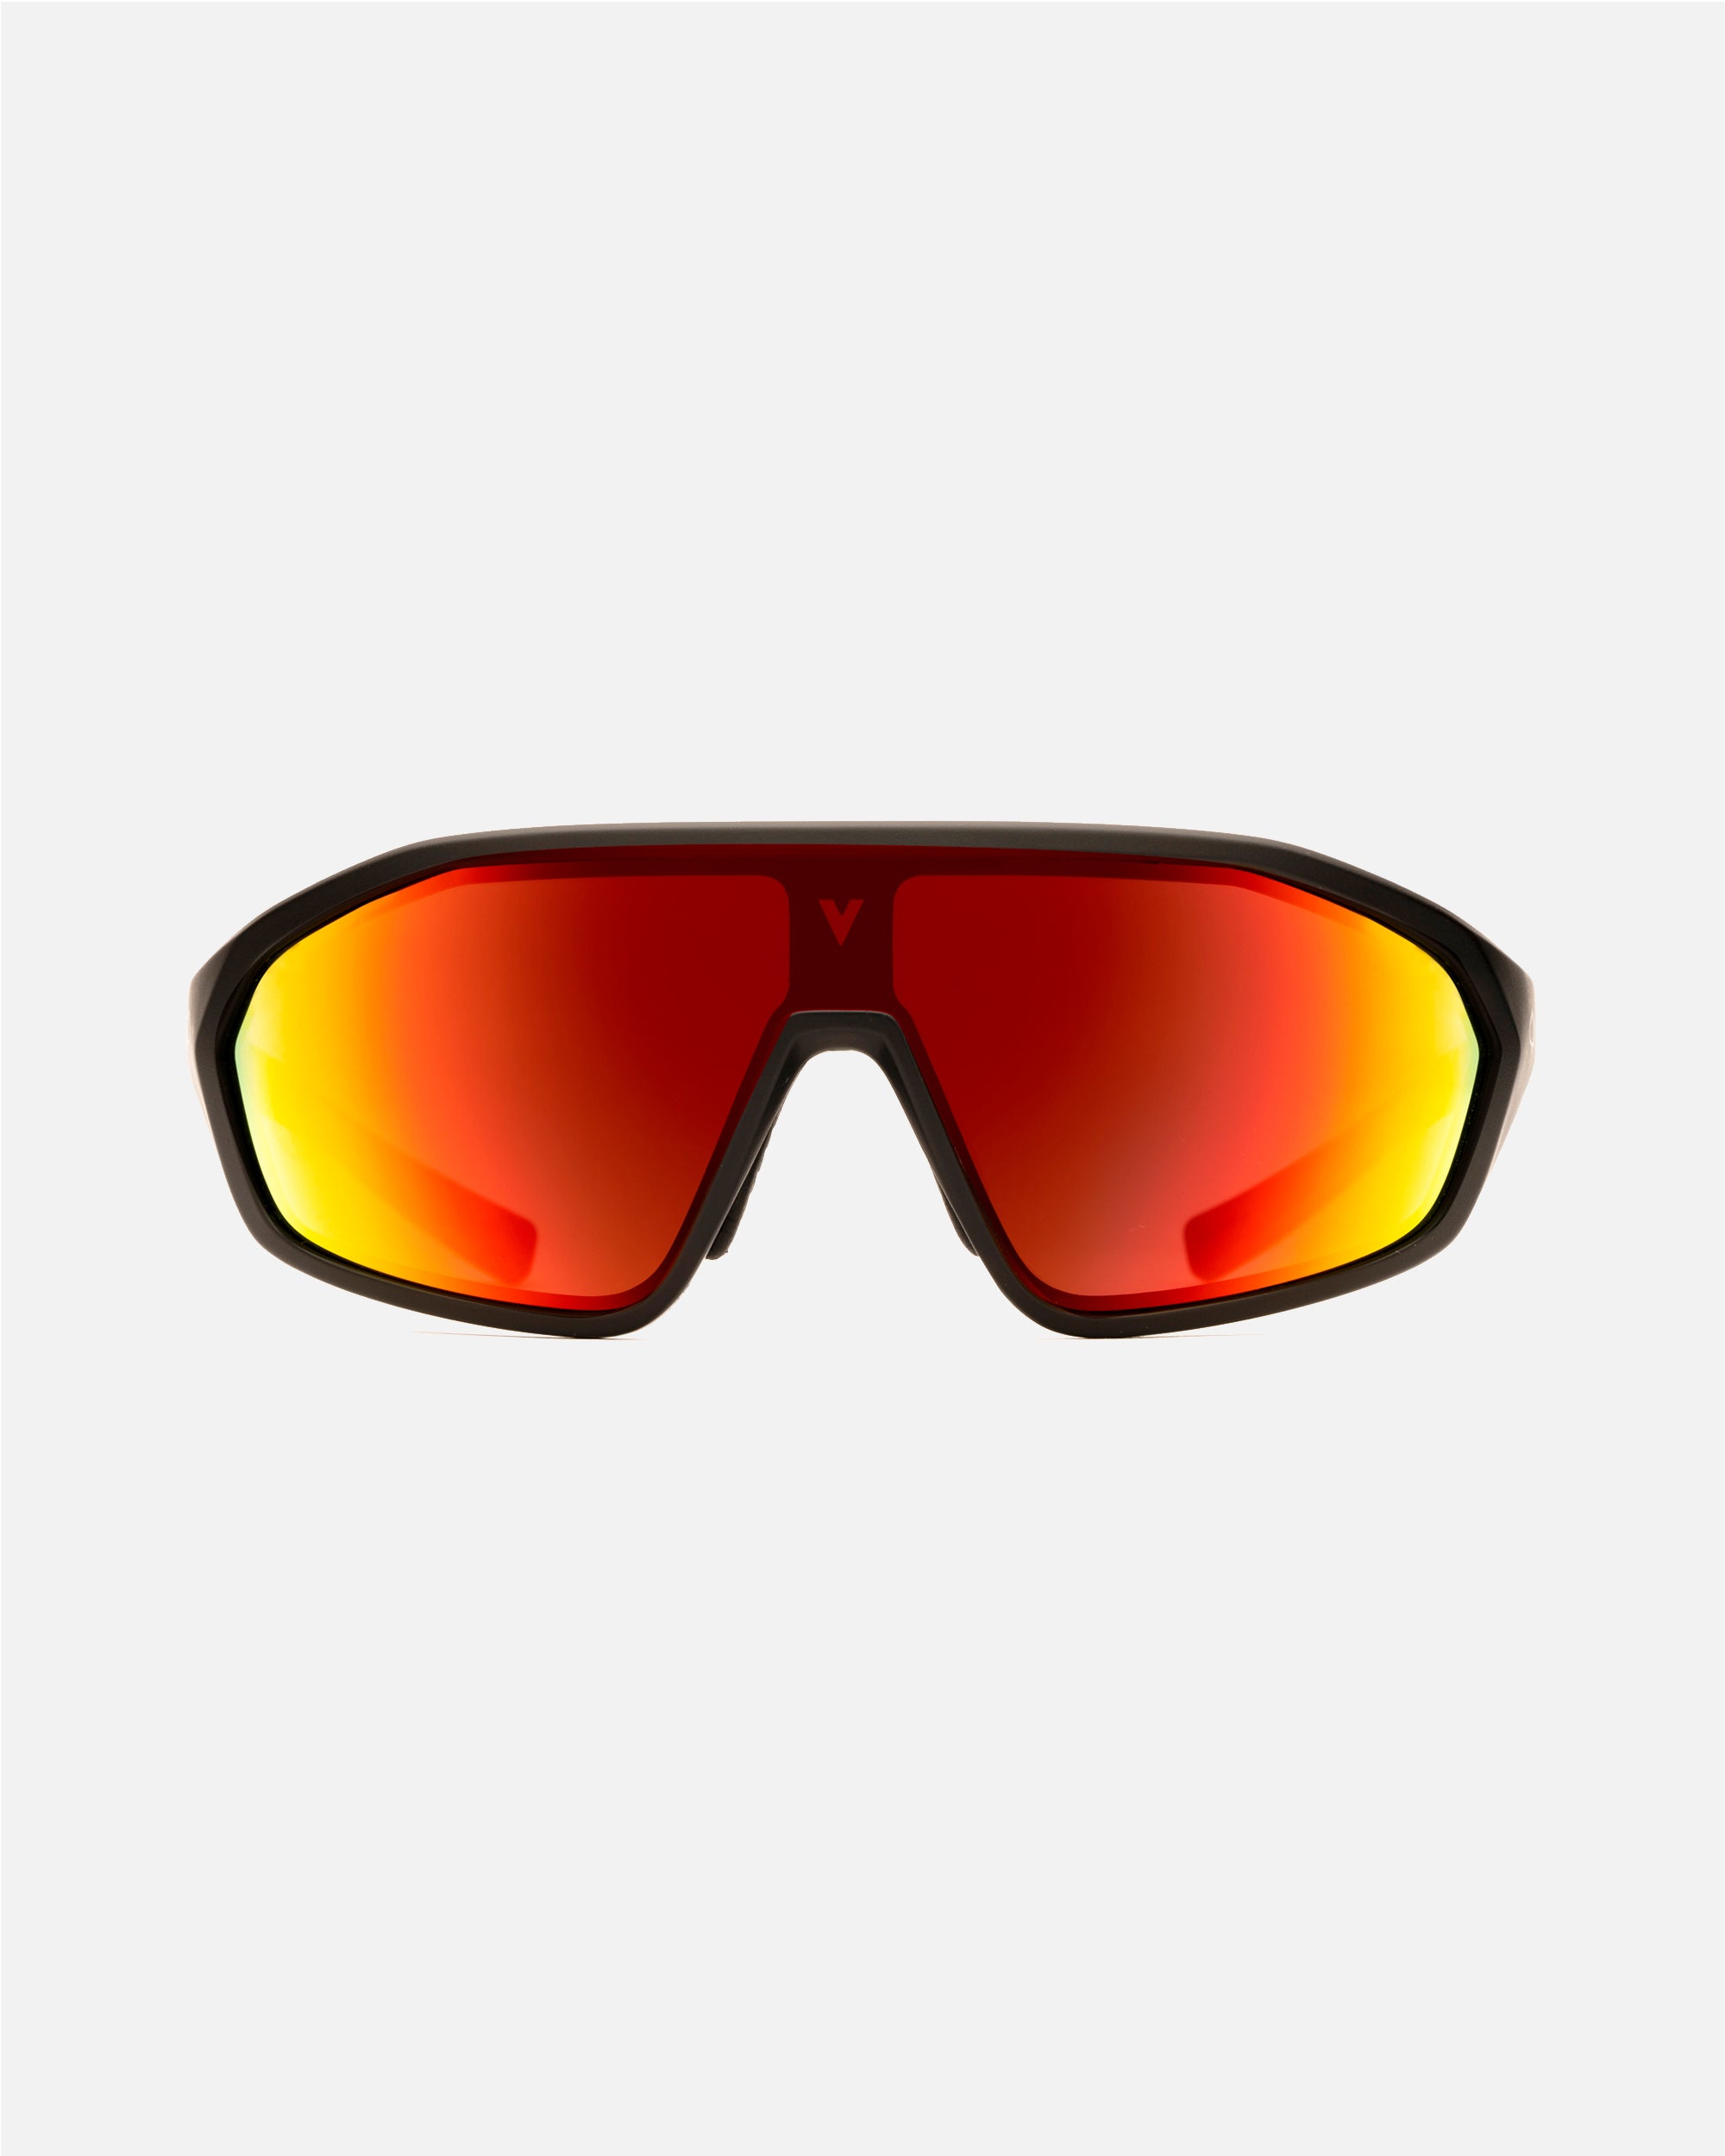 Vuarnet TREK ASPENX Black ; Grey - Sport Sunglasses